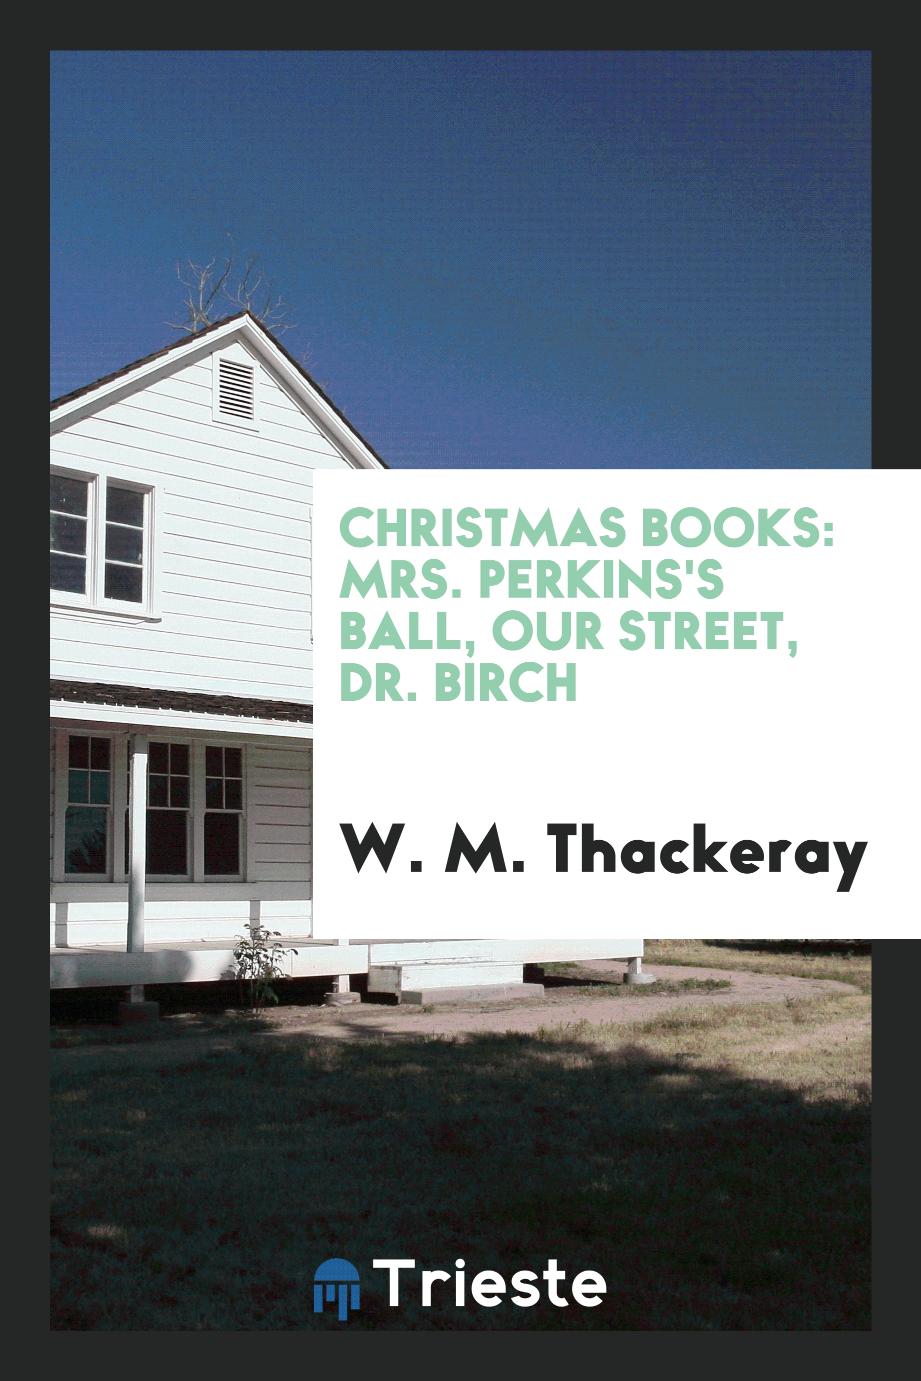 Christmas Books: Mrs. Perkins's Ball, Our street, Dr. Birch